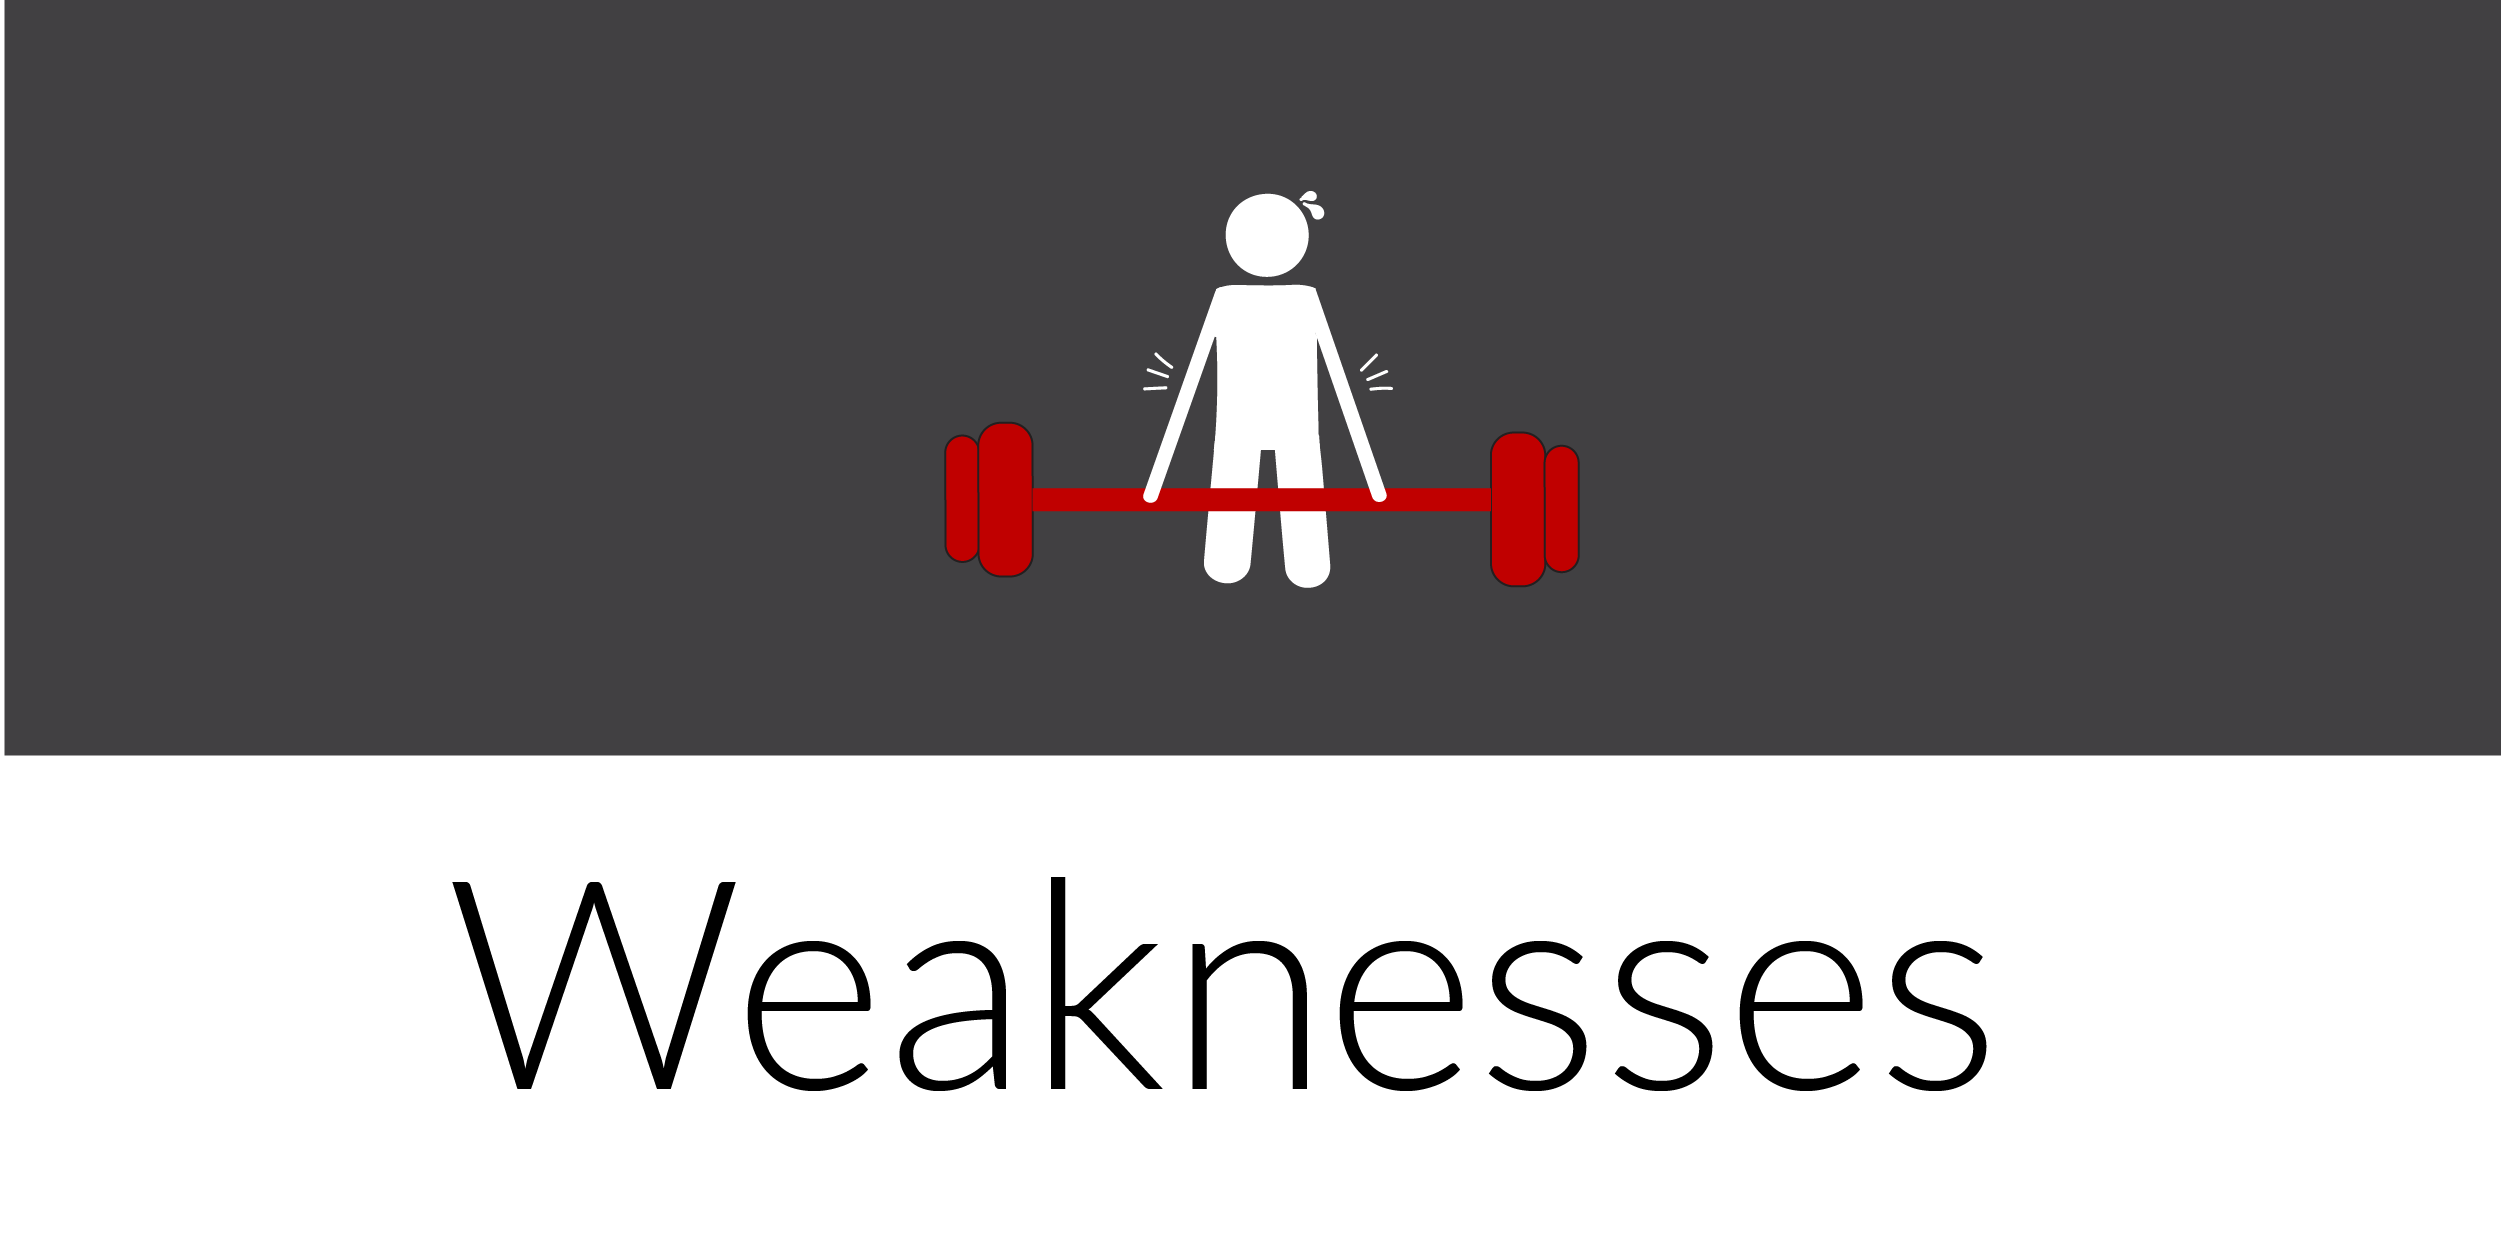 SWOT Analysis - Weaknesses